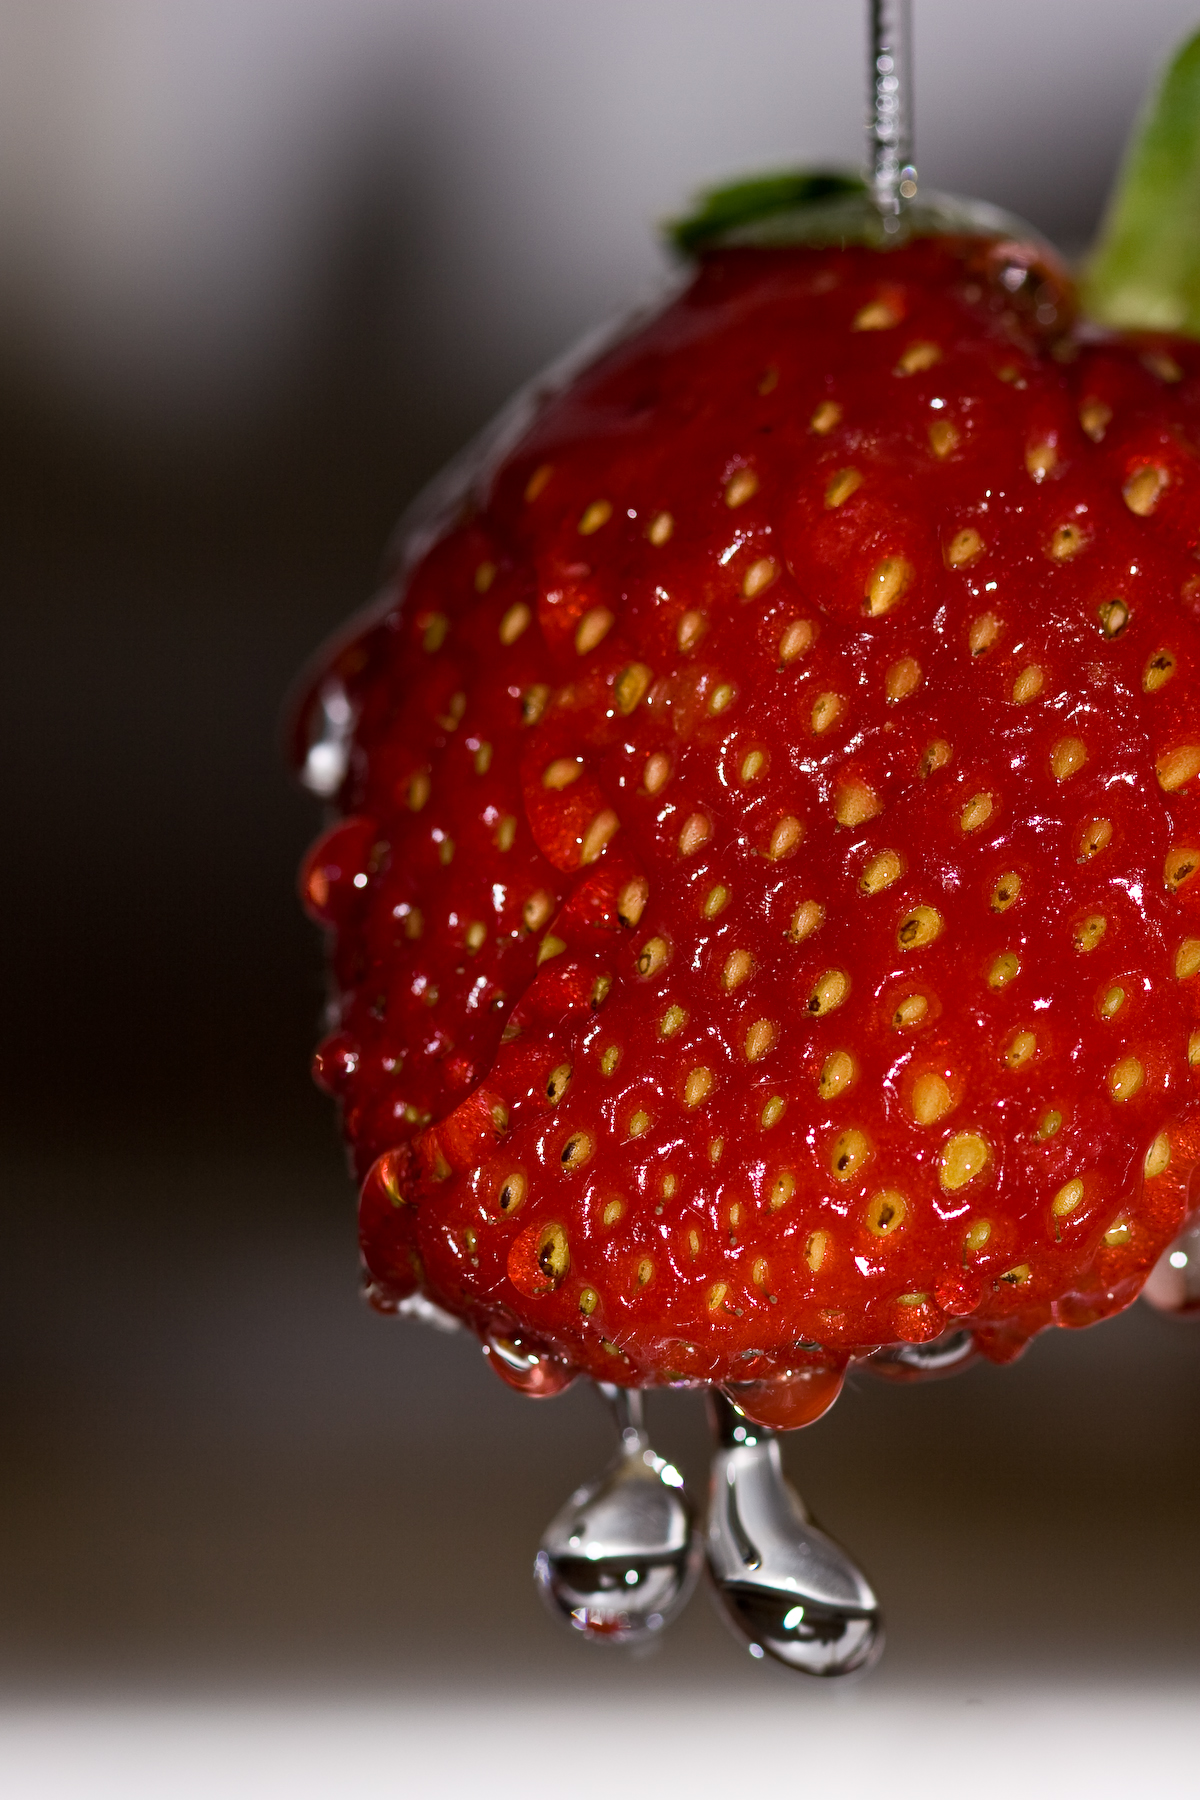 Wet strawberry photo